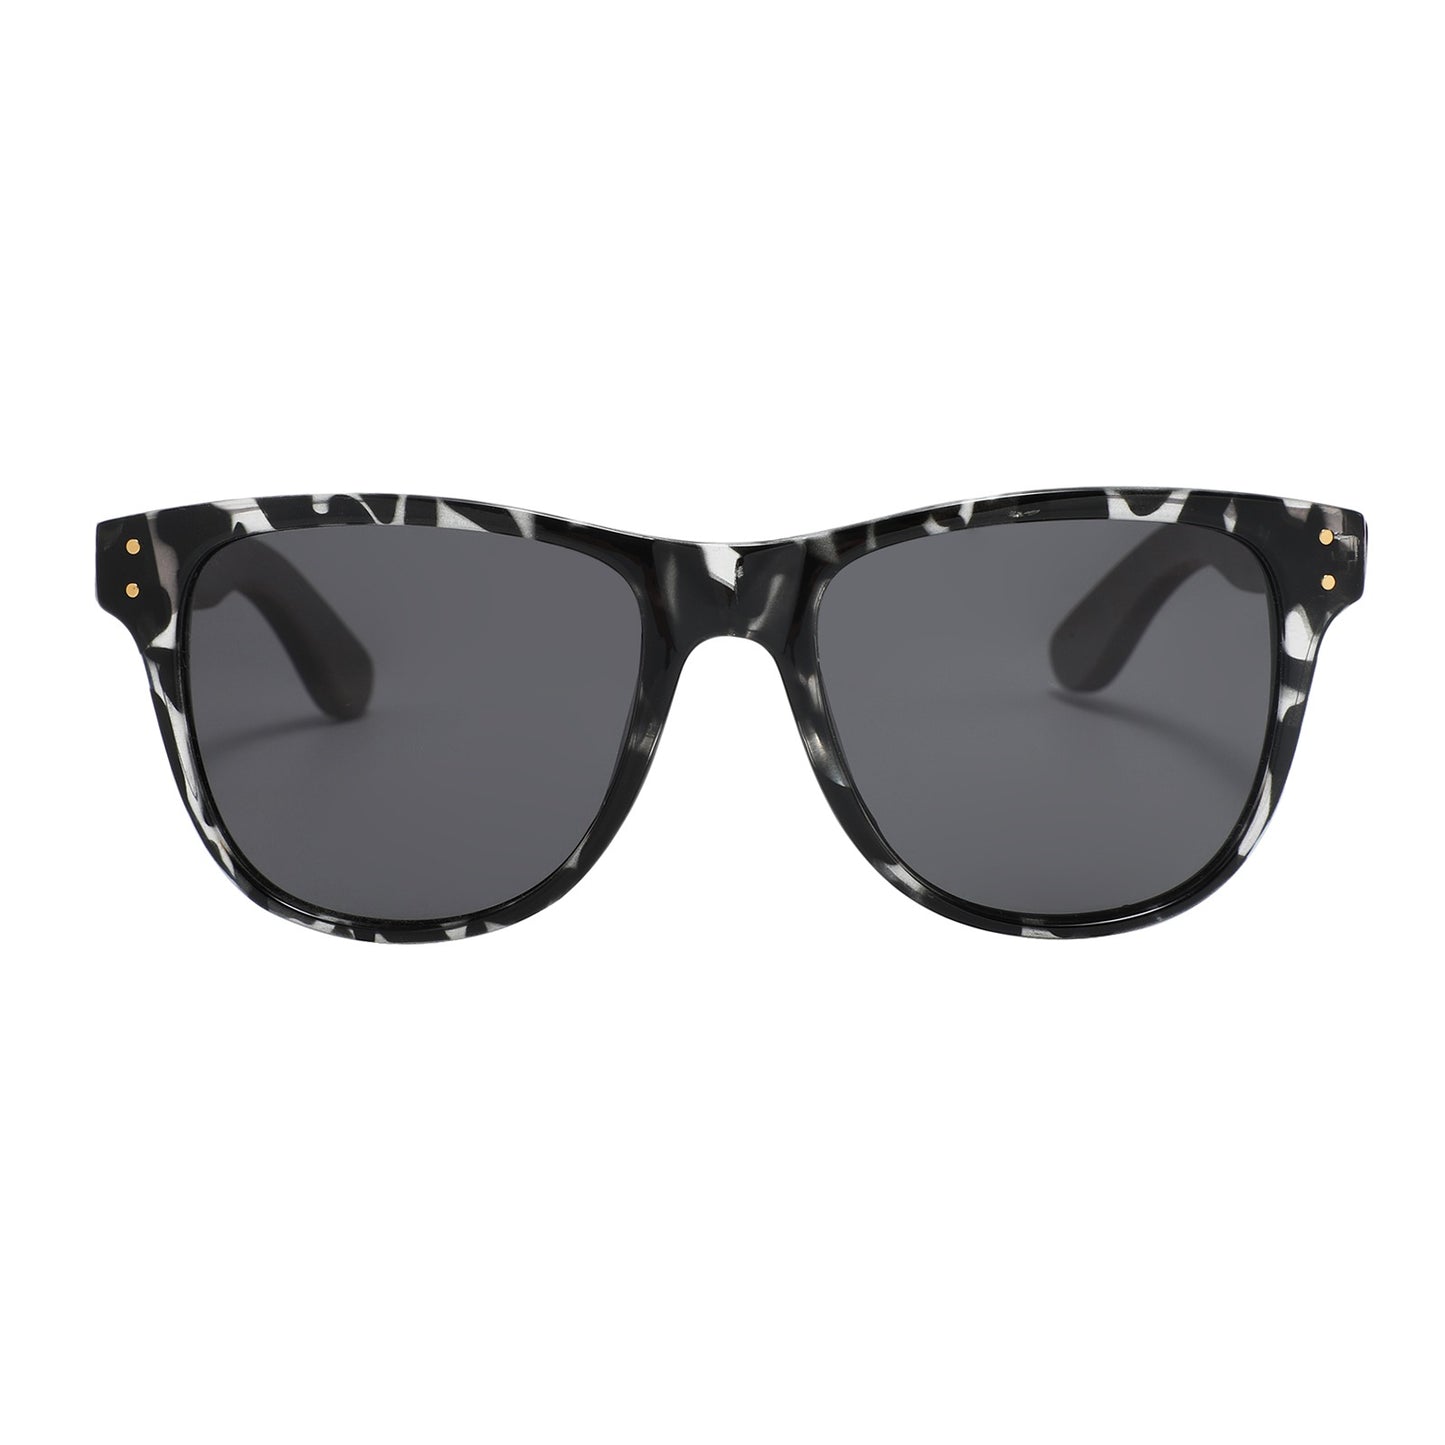 LEXI TS BLACK Ladies Sunglasses Polarised Lens Wooden Arms